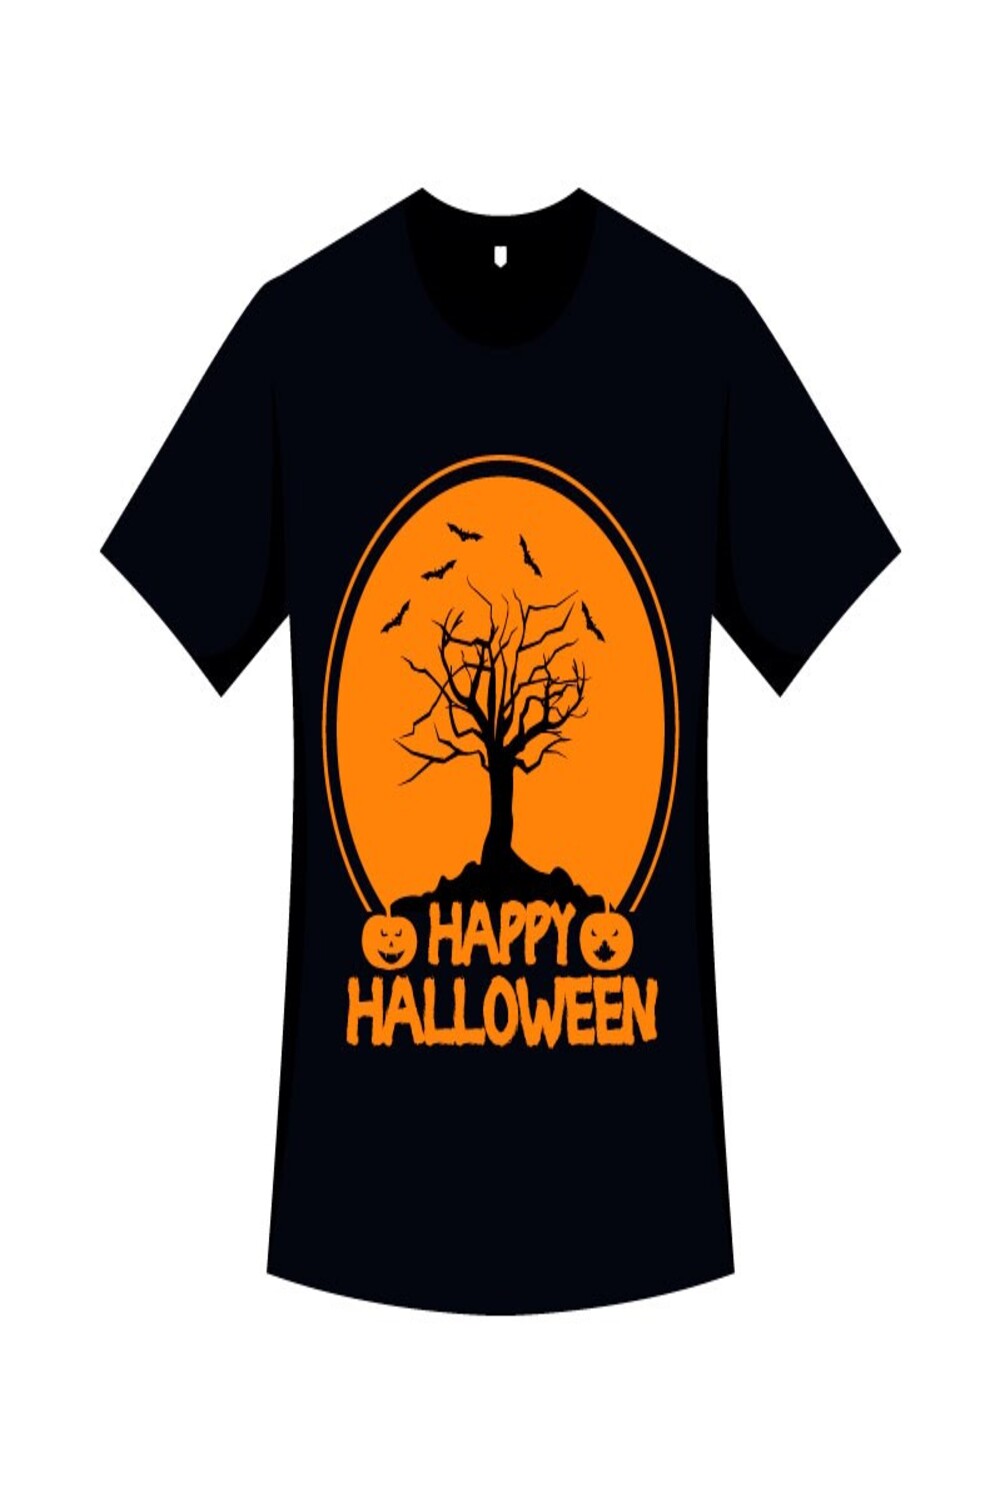 Halloween Tree Silhouette T-shirt pinterest image.